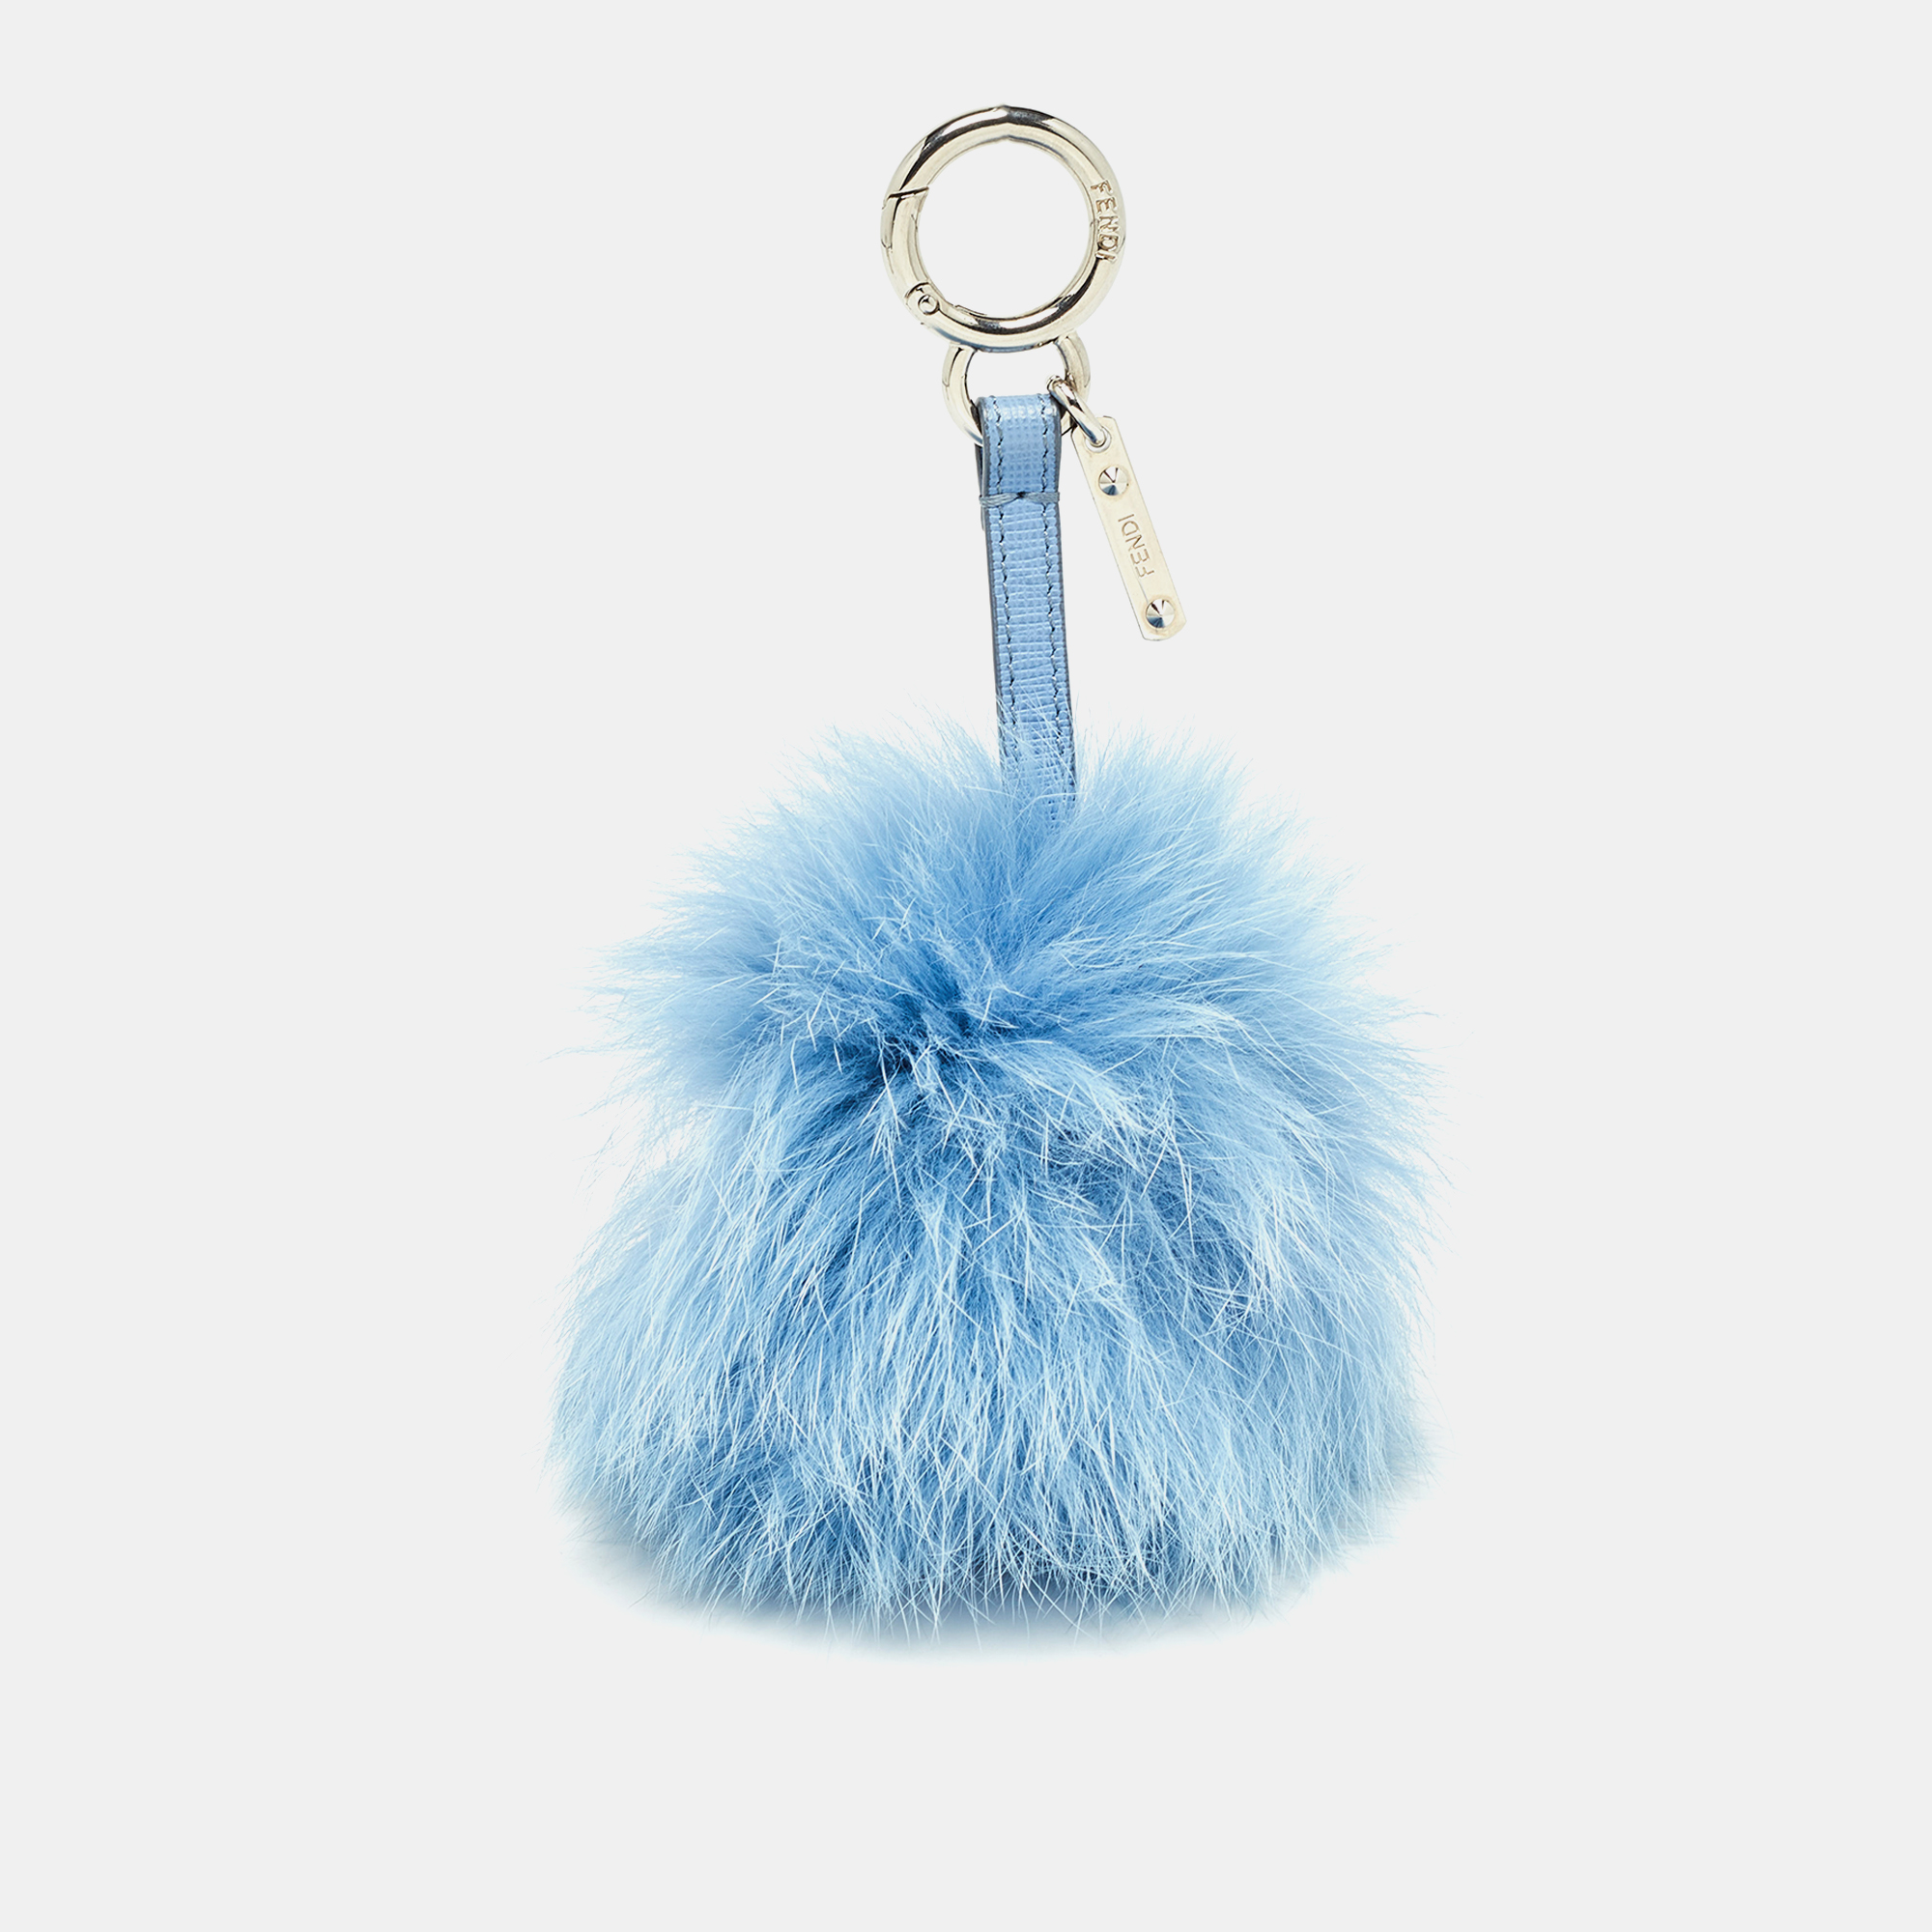 Fendi blue fur and leather pom pom bag charm